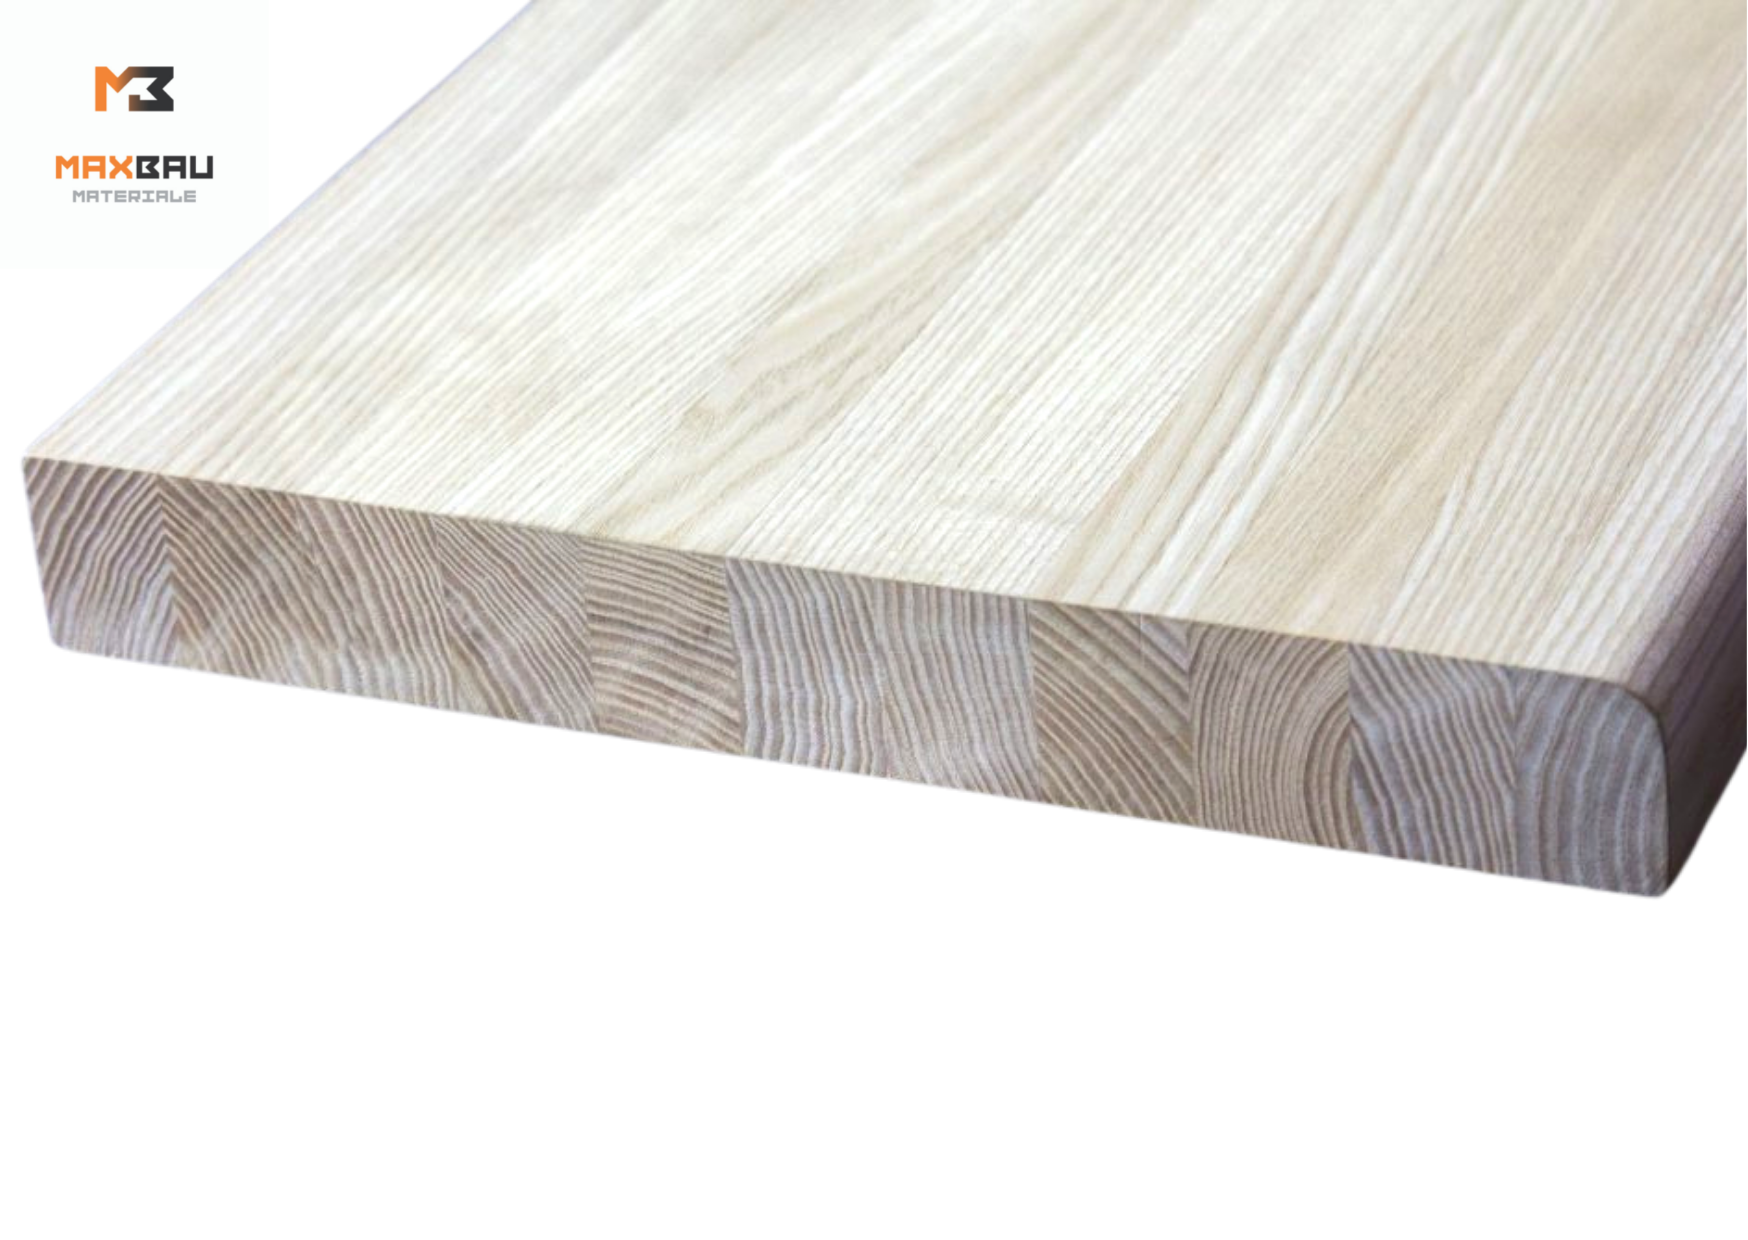 Plates of glued wood - MaxBau wooden plate glued 800 x 200 x 28 mm Class AB, https:maxbau.ro